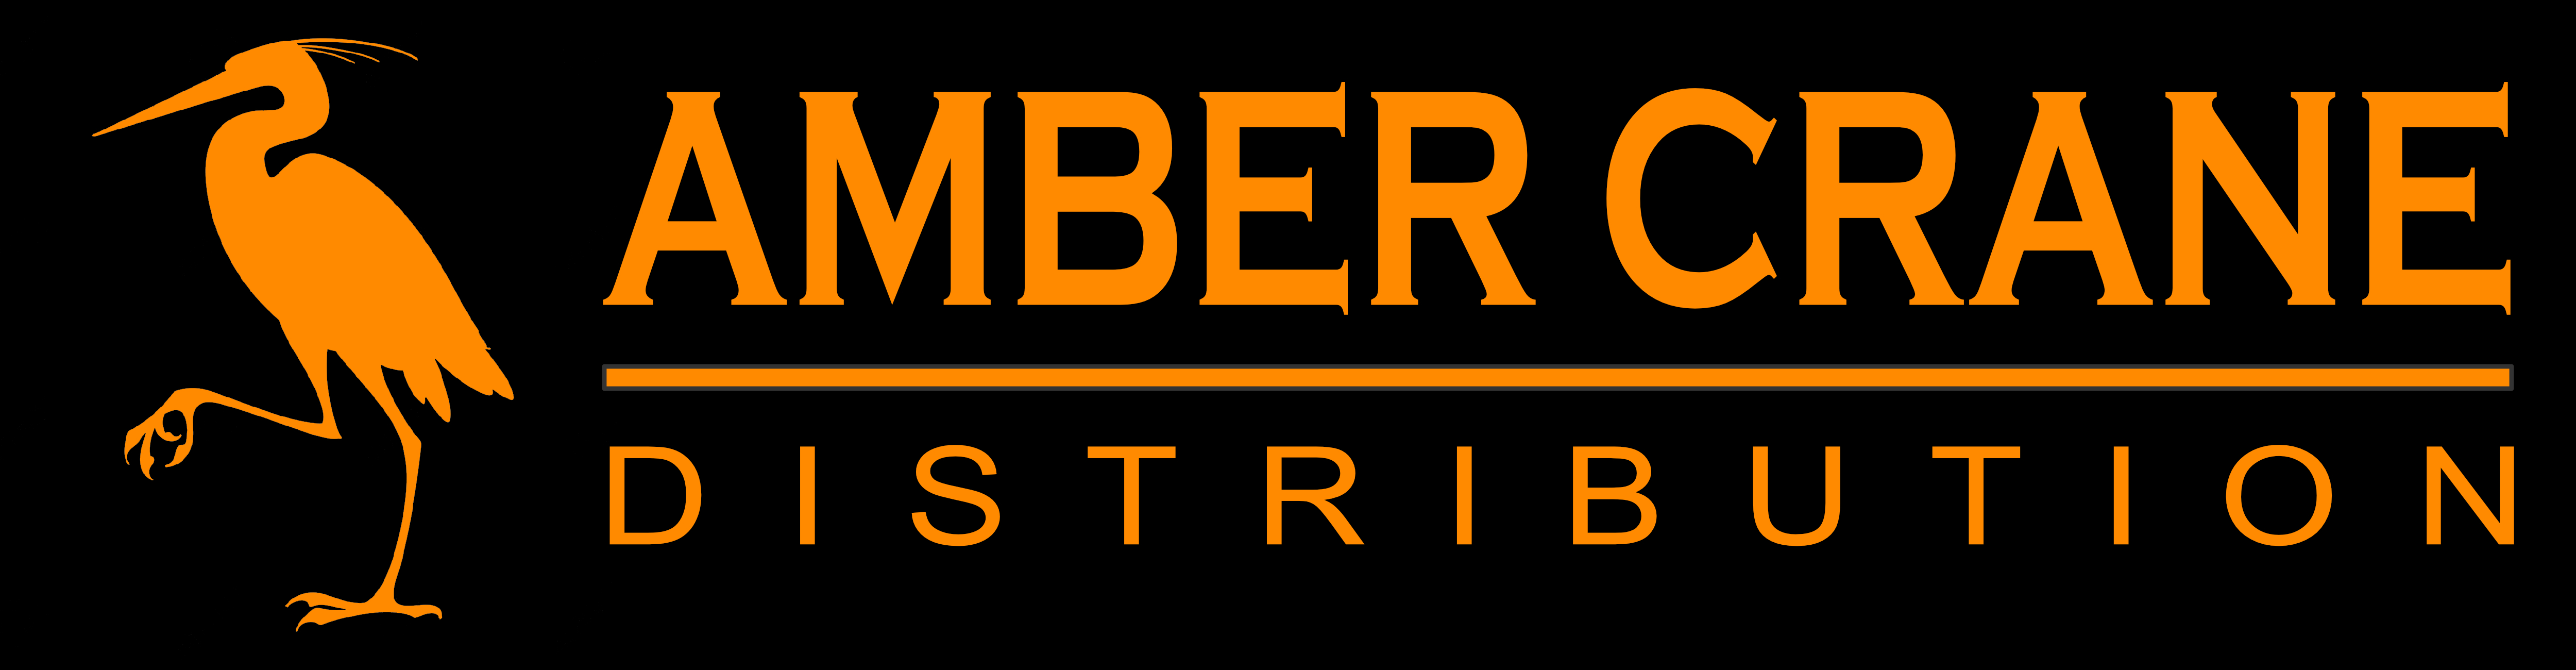 Amber Crane Distribution logo